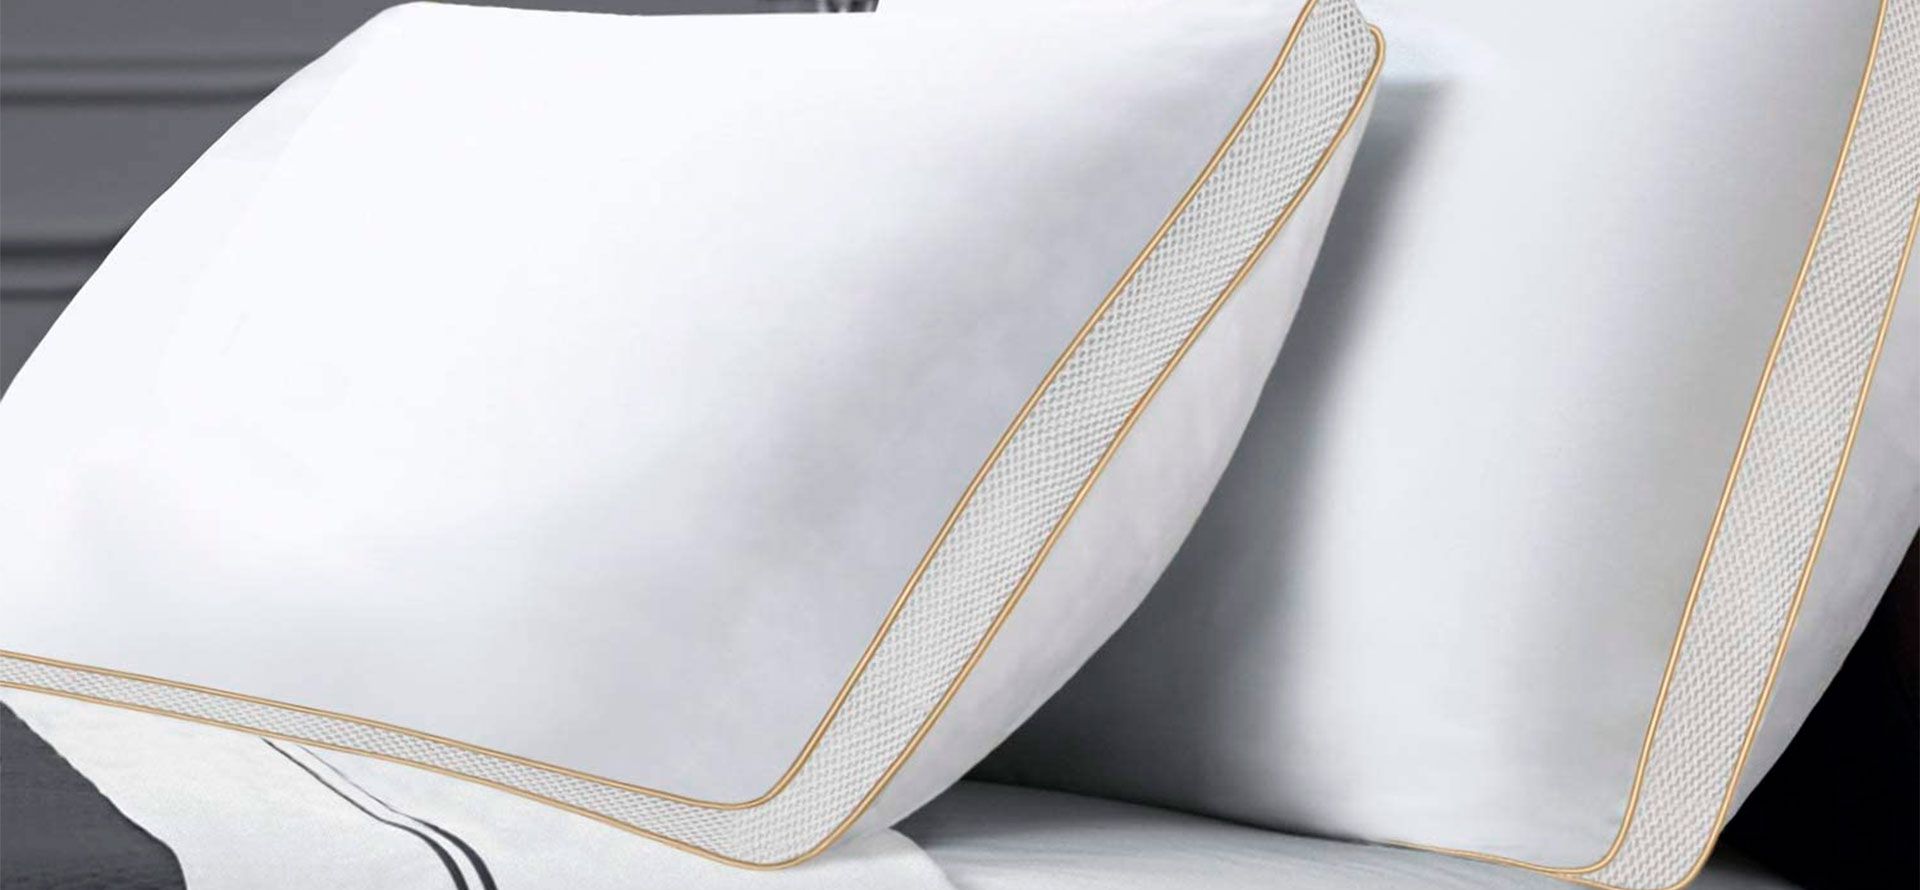 Luxury hotel pillows.